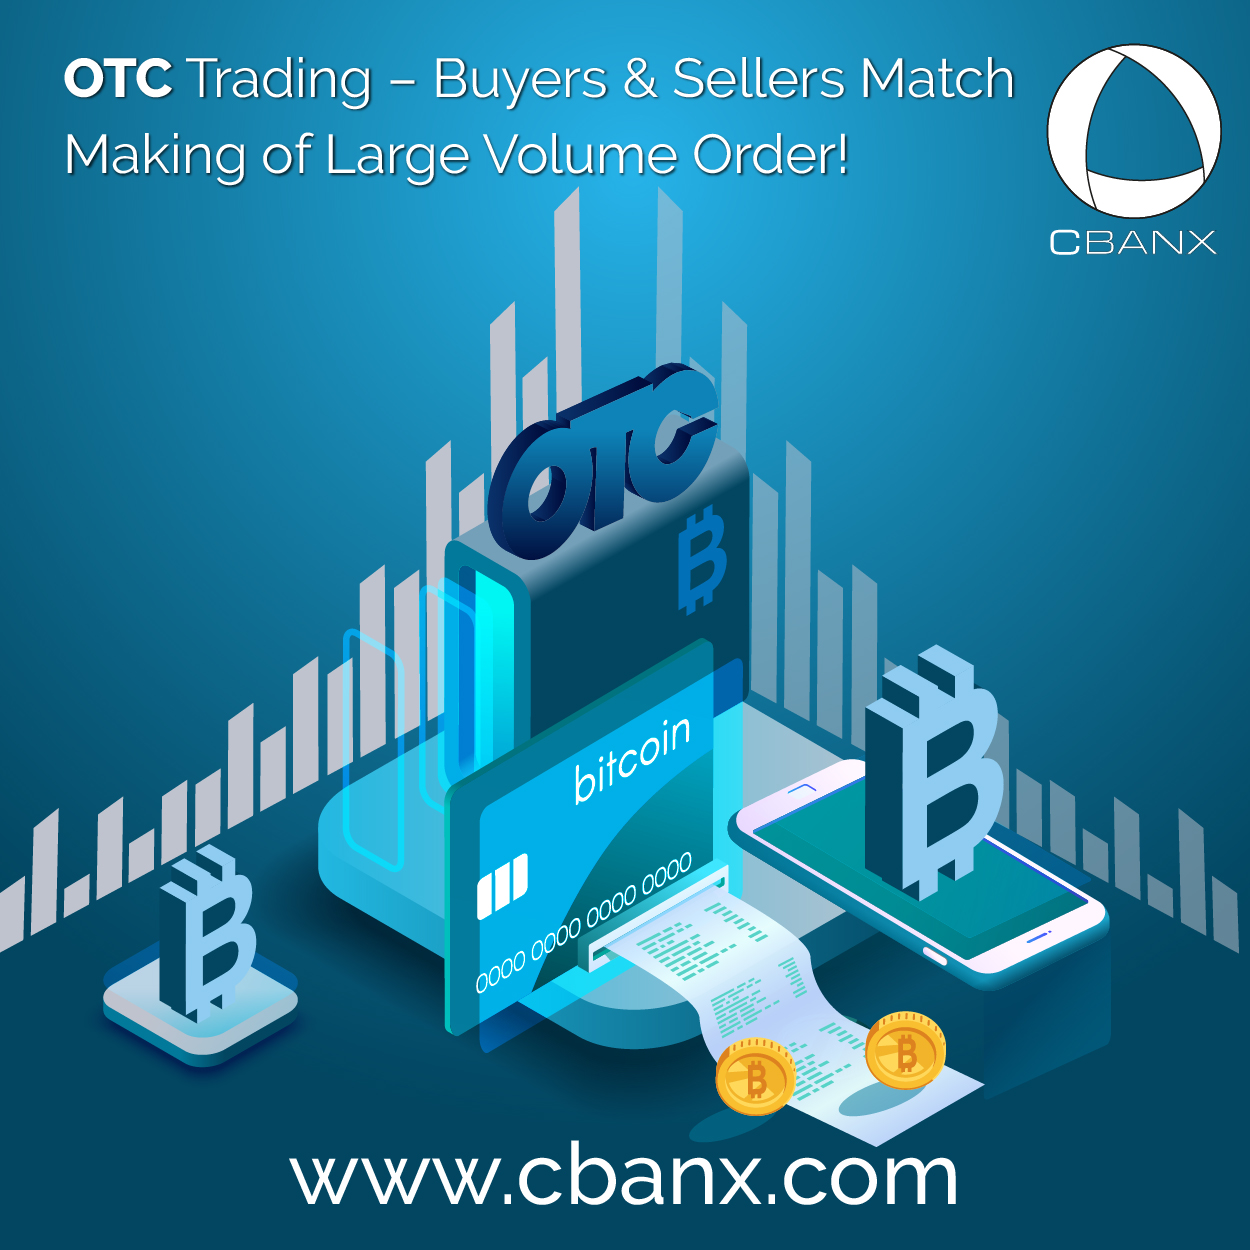 CBANX Cryptocurrency Trading Platform Bitcoins Exchange OTC Trading Buyers & Sellers